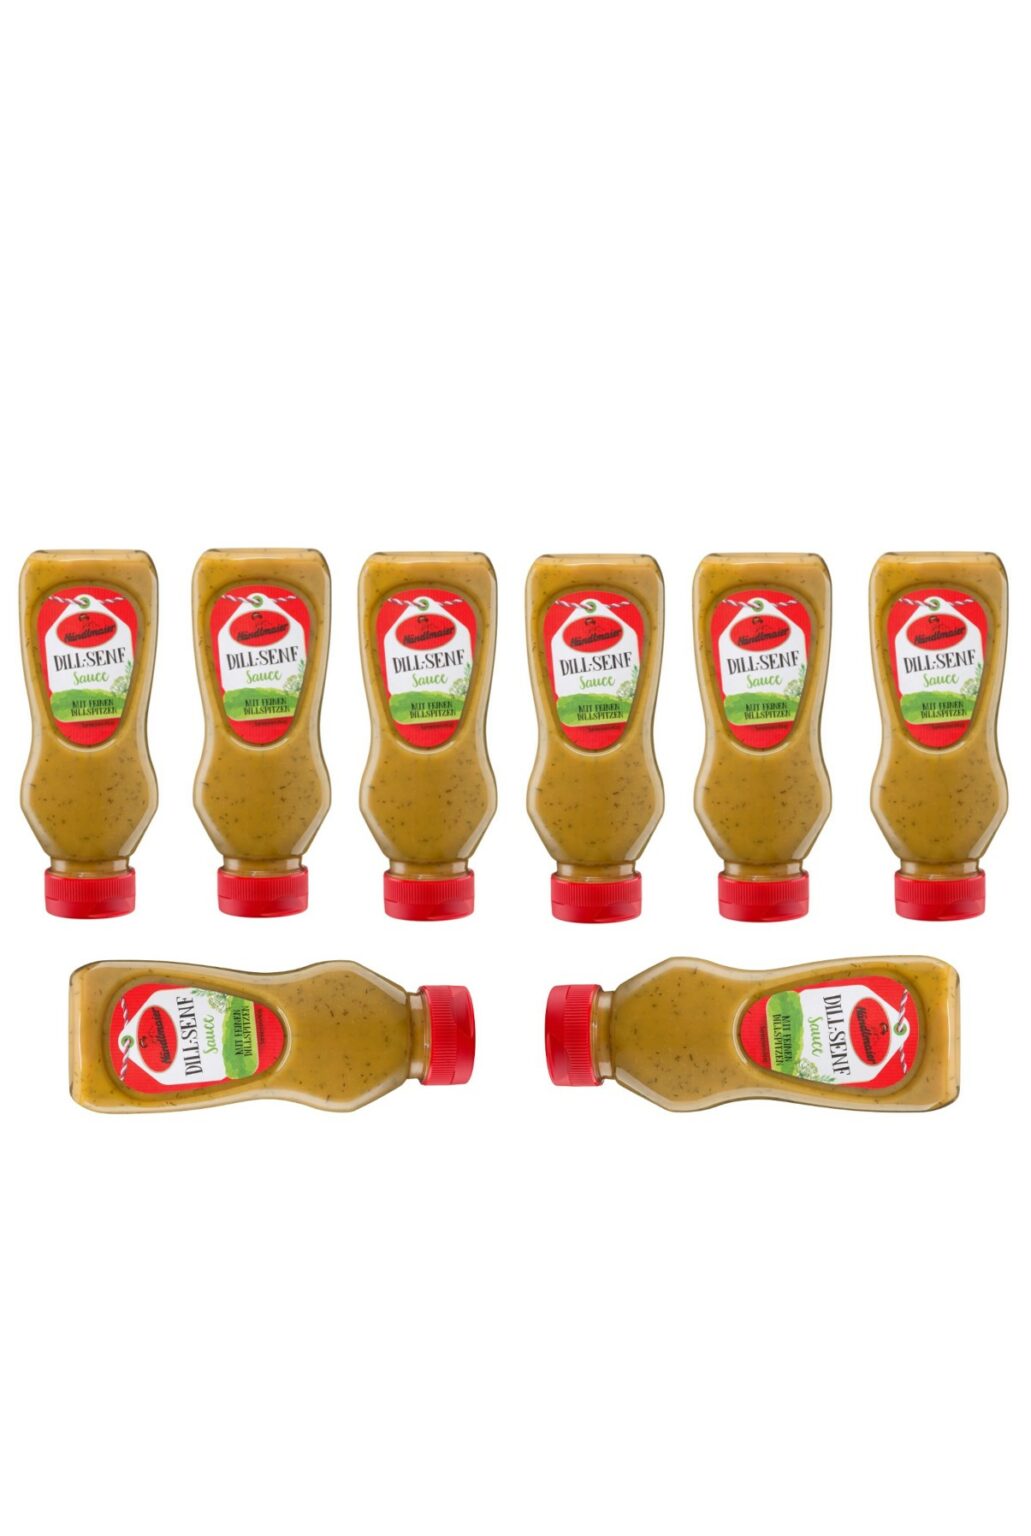 Dill-Senf Sauce von Händlmaier 8 x 225ml Squeeze im Bundle - Händlmaier